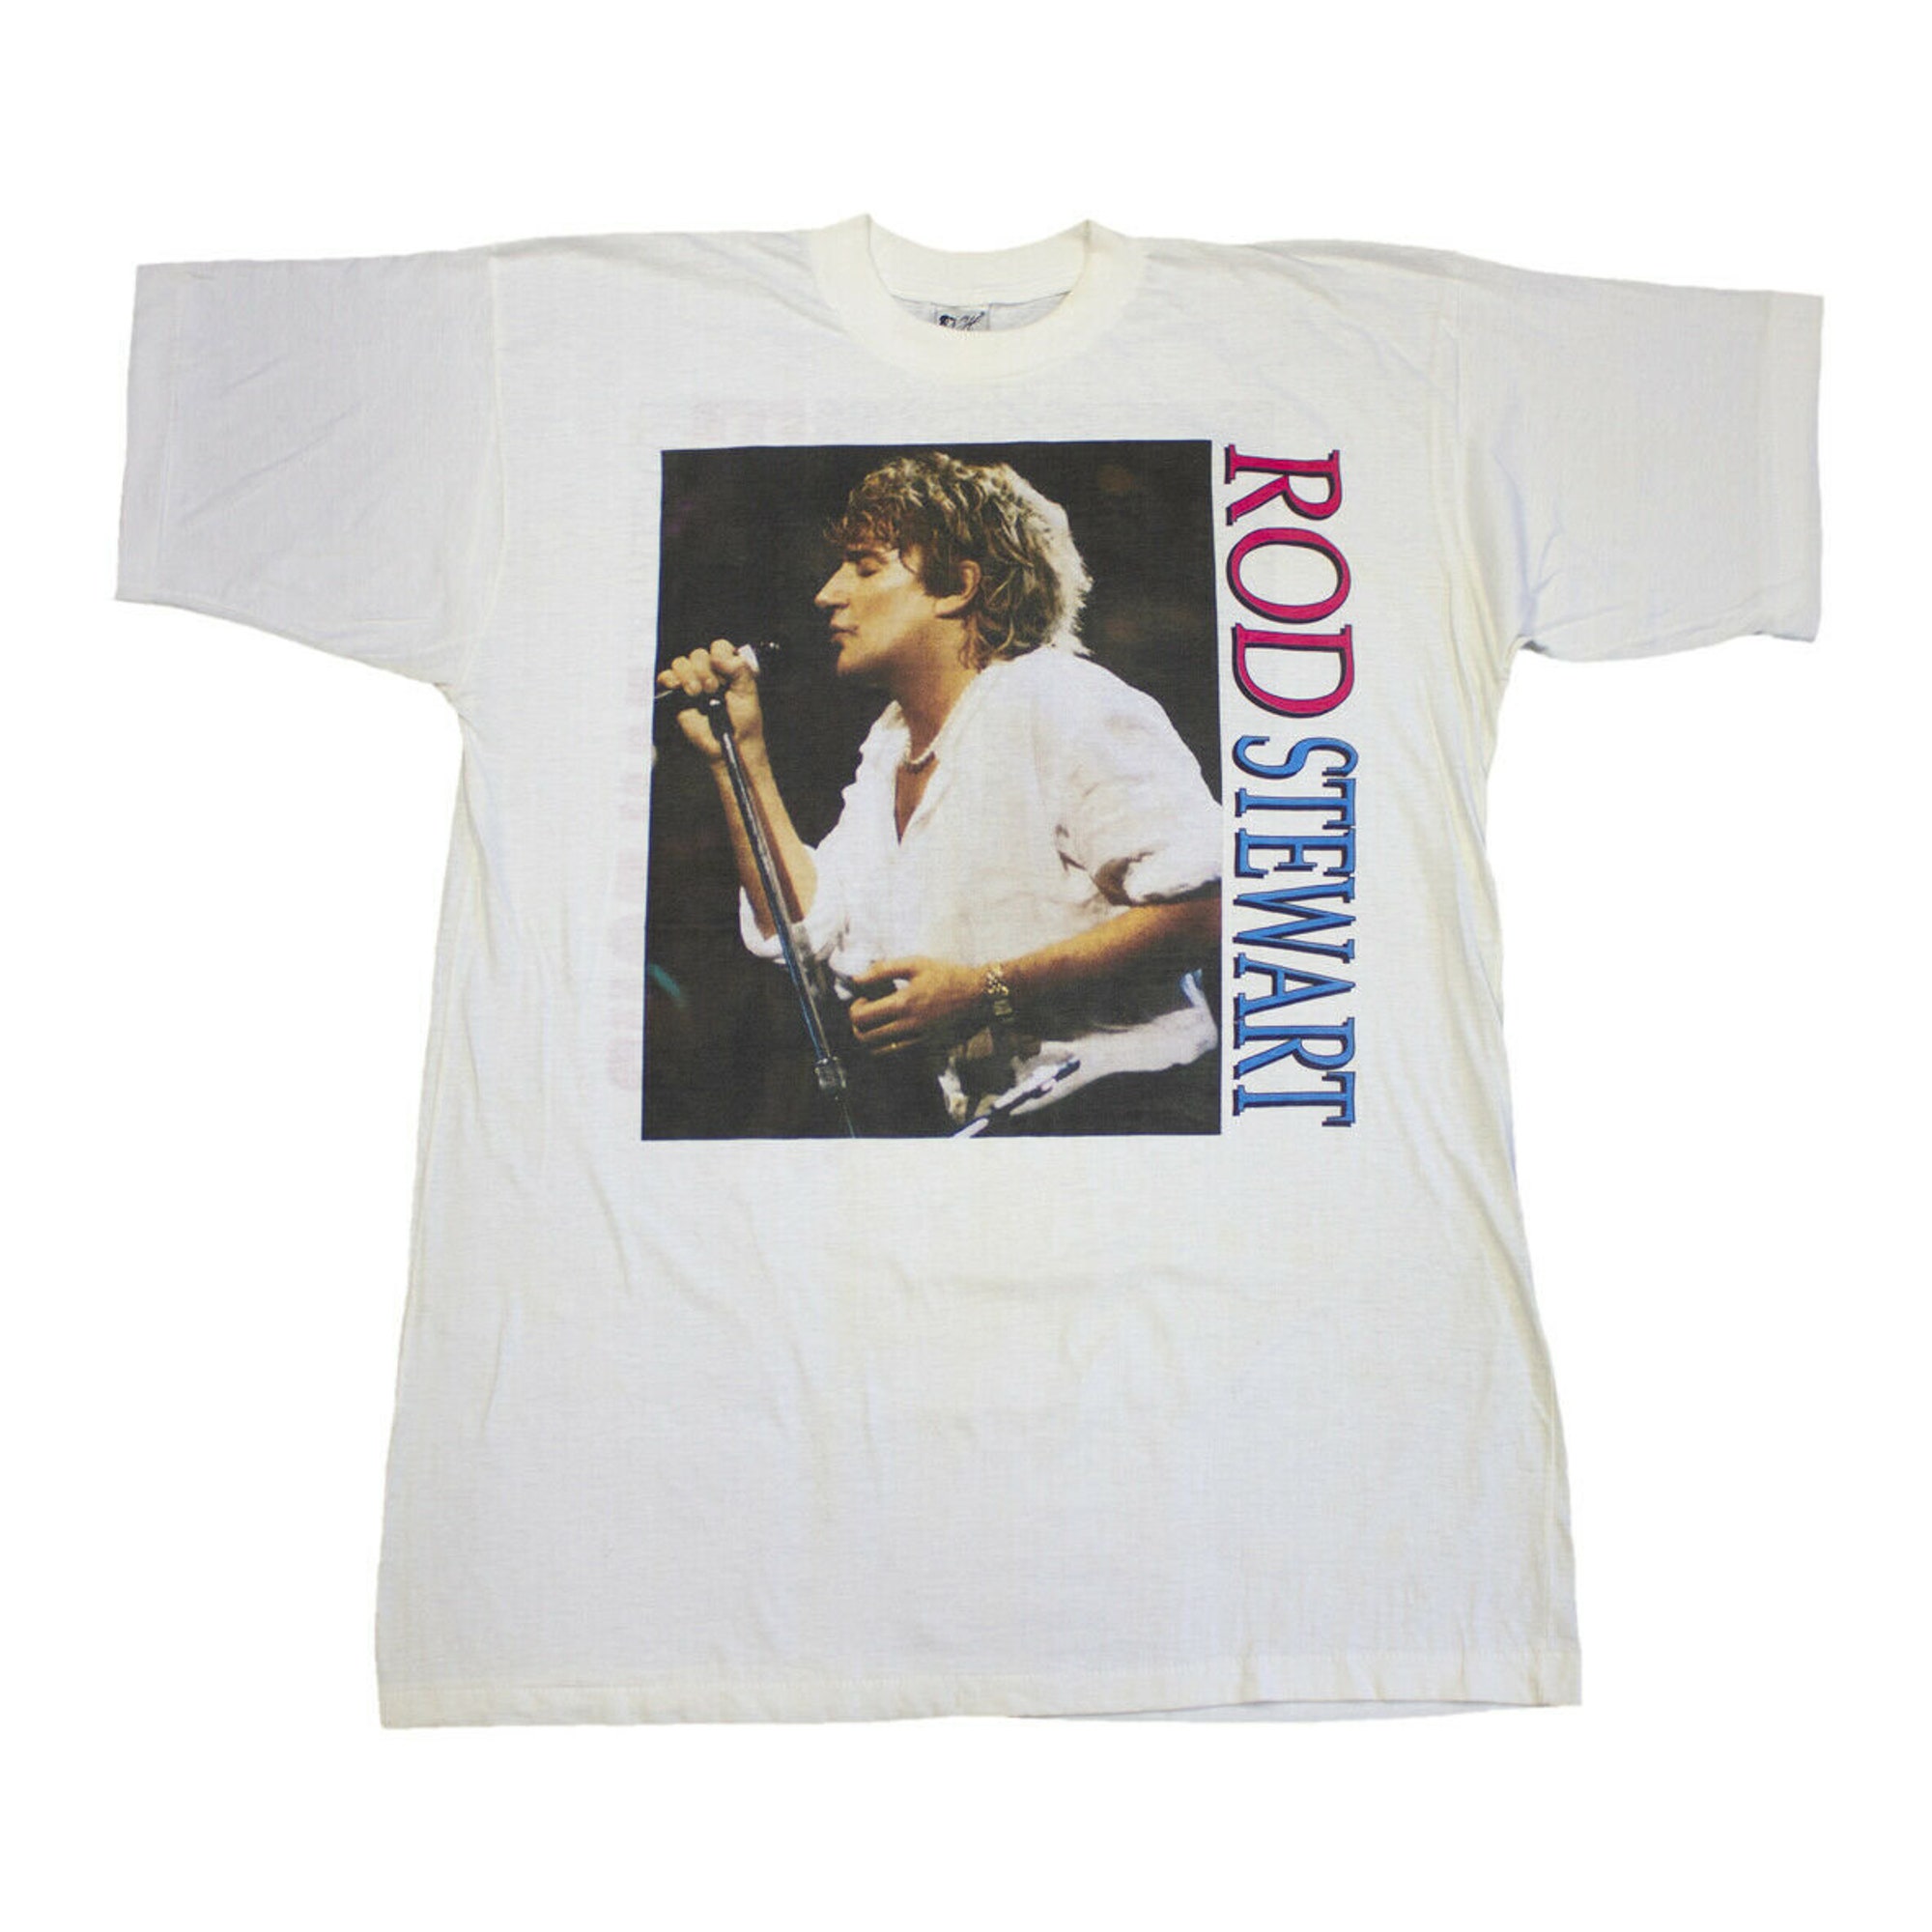 Discover Maglietta T-Shirt Stampa Su 2 Lati Rod Stewart Per Uomo Donna Bambini - Rod Stewart European Tour 1995